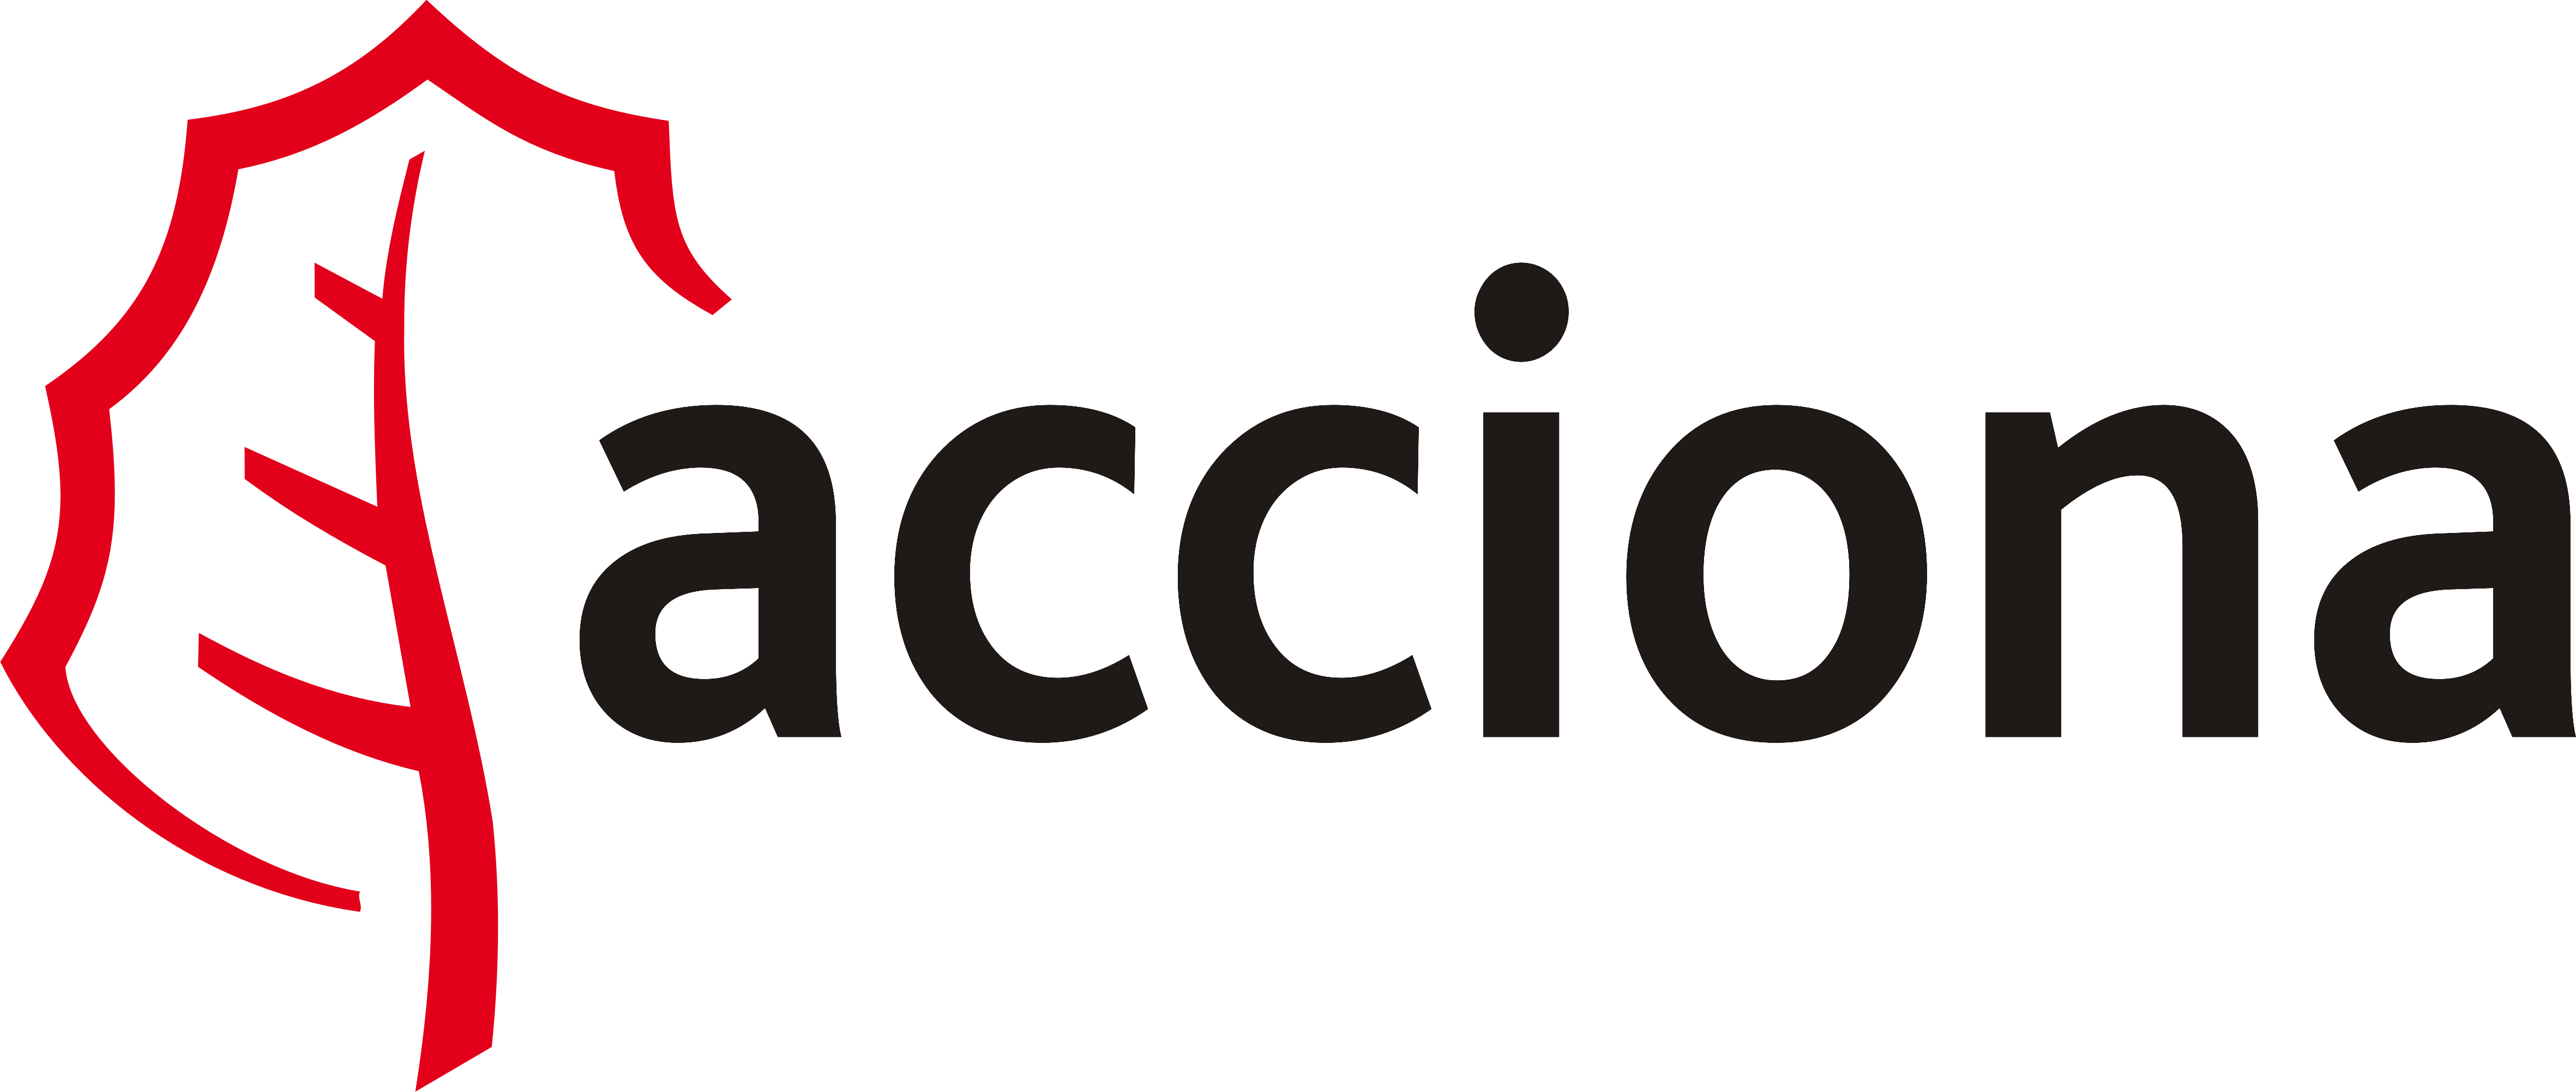 Acciona Logo Image Sizes: 4724 X 2002 Pixels. Format: Png. Filesize: 197 Kb. - Acciona, Transparent background PNG HD thumbnail